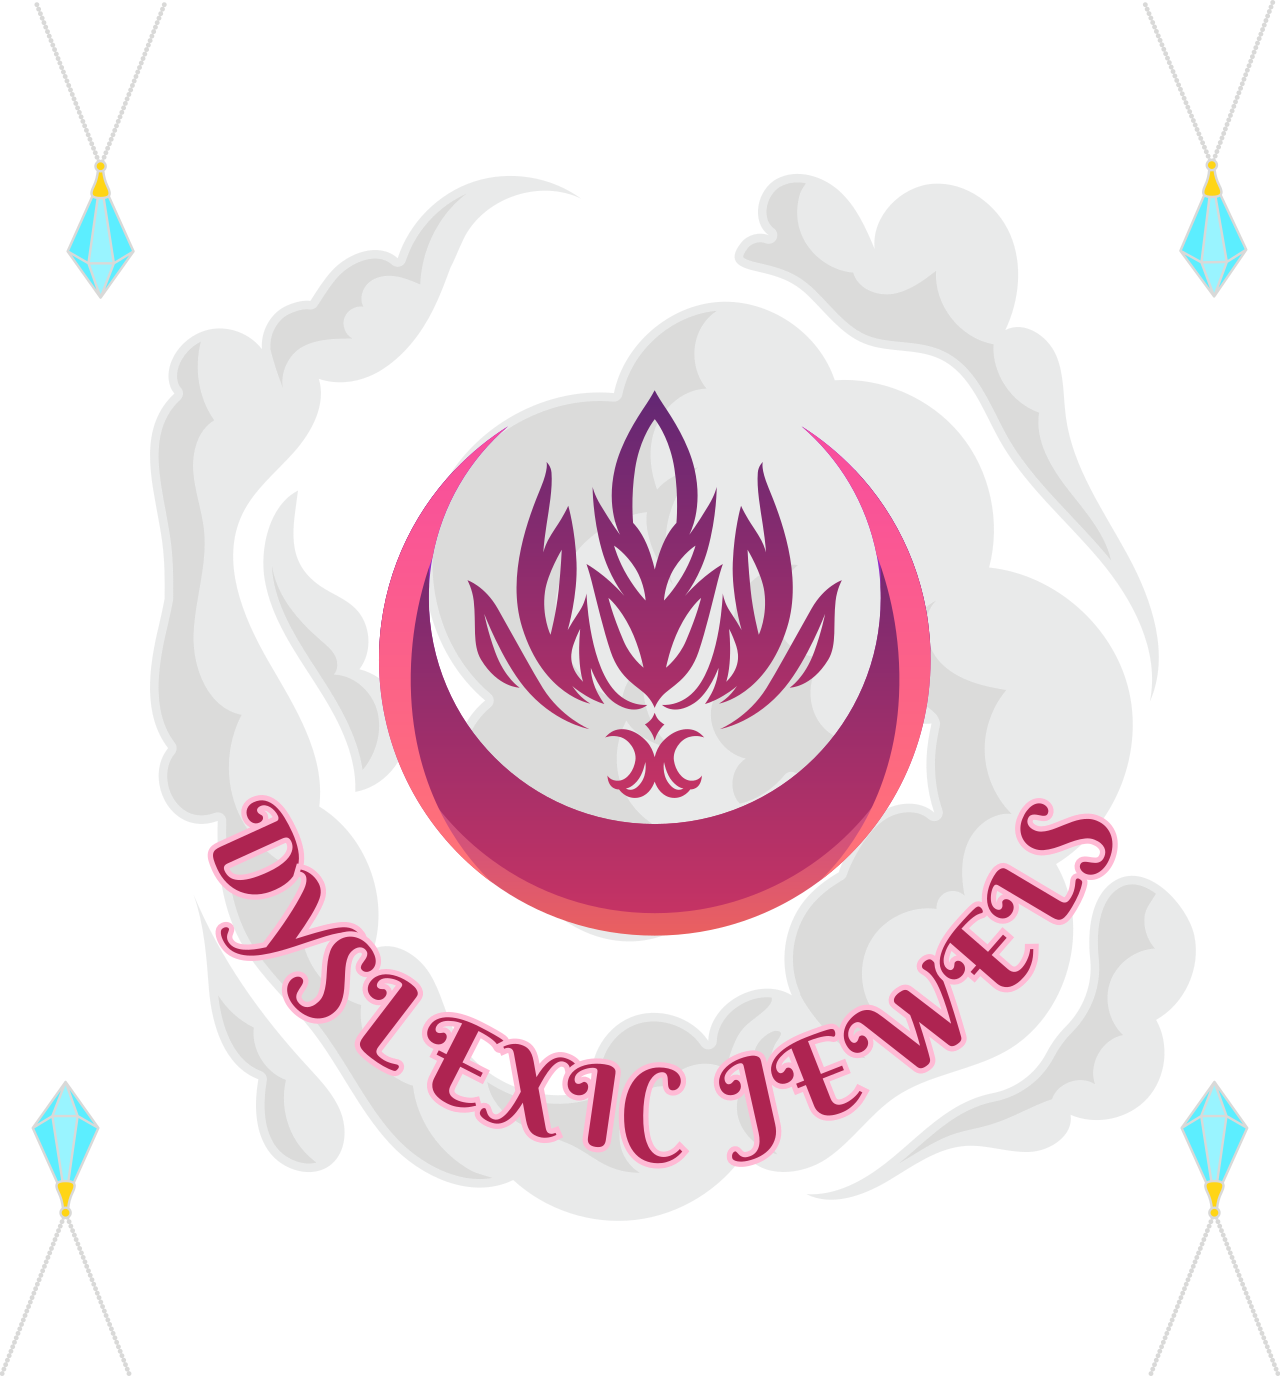 DYSLEXIC  JEWELS's logo